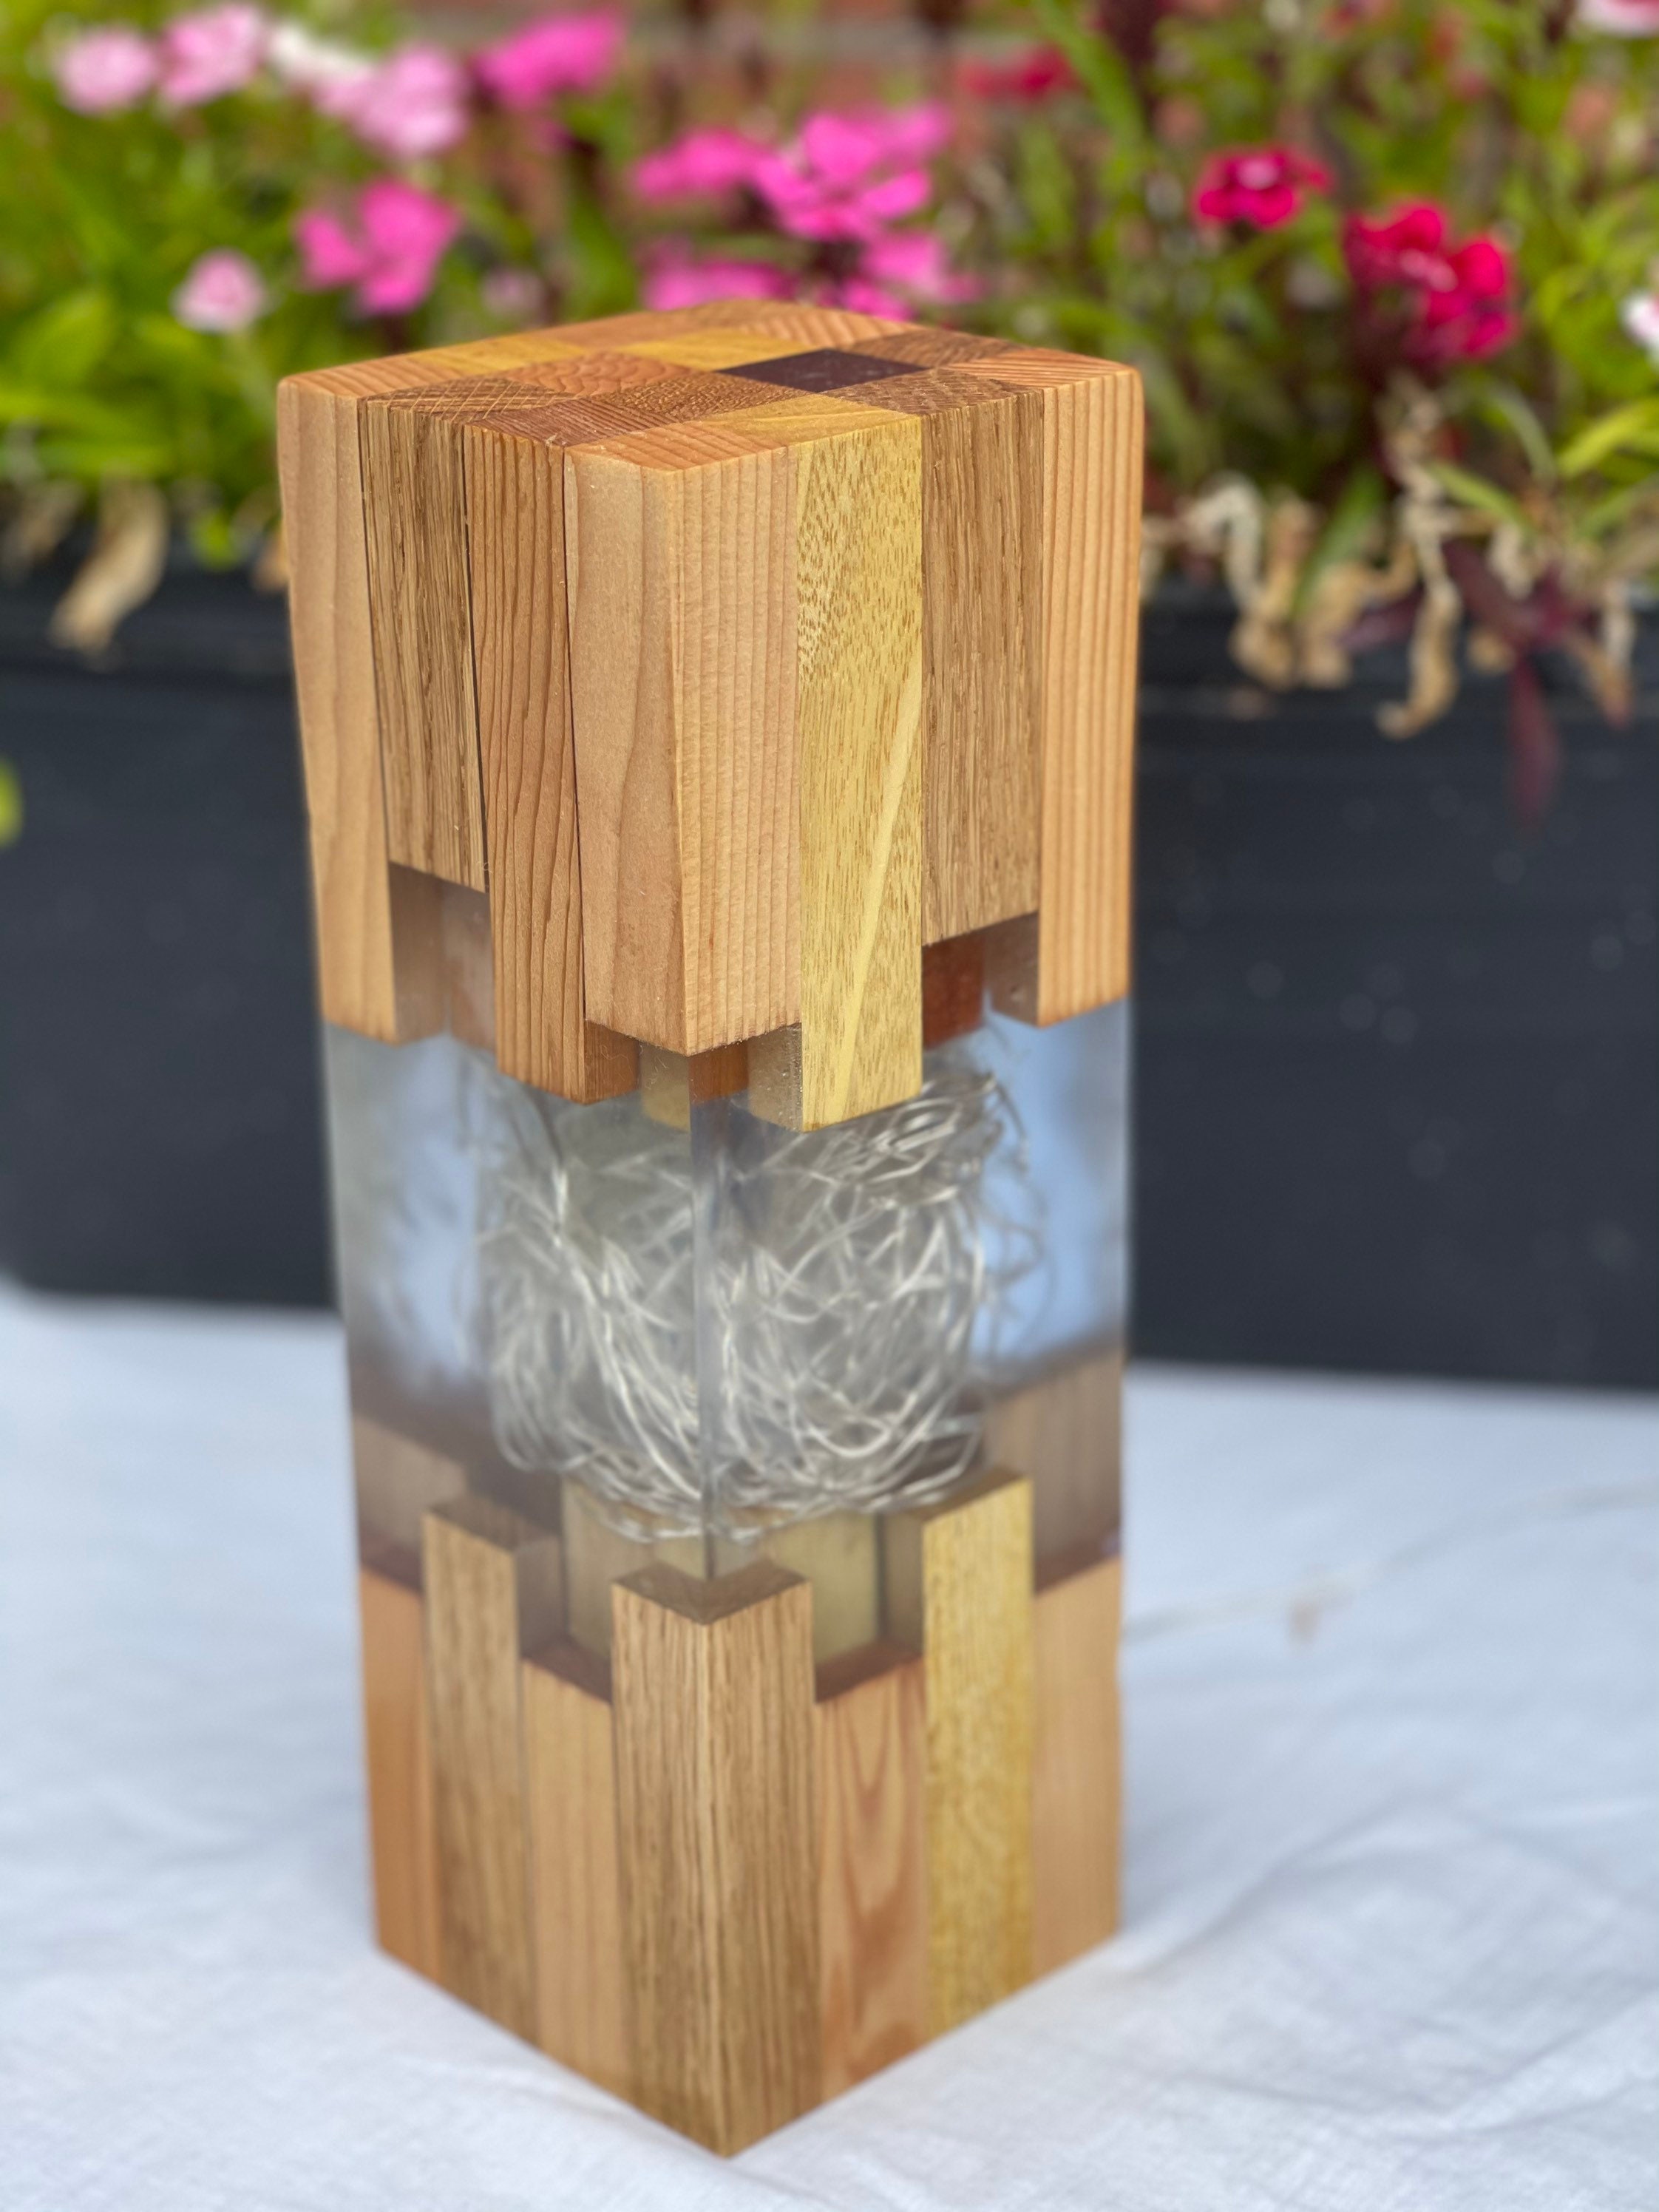 Beautiful Pine Cone Crafts To Make Stunning Home Decor, Smartyleowl, Resin Lamp, Wood Resin Lamp, Resin Diorama